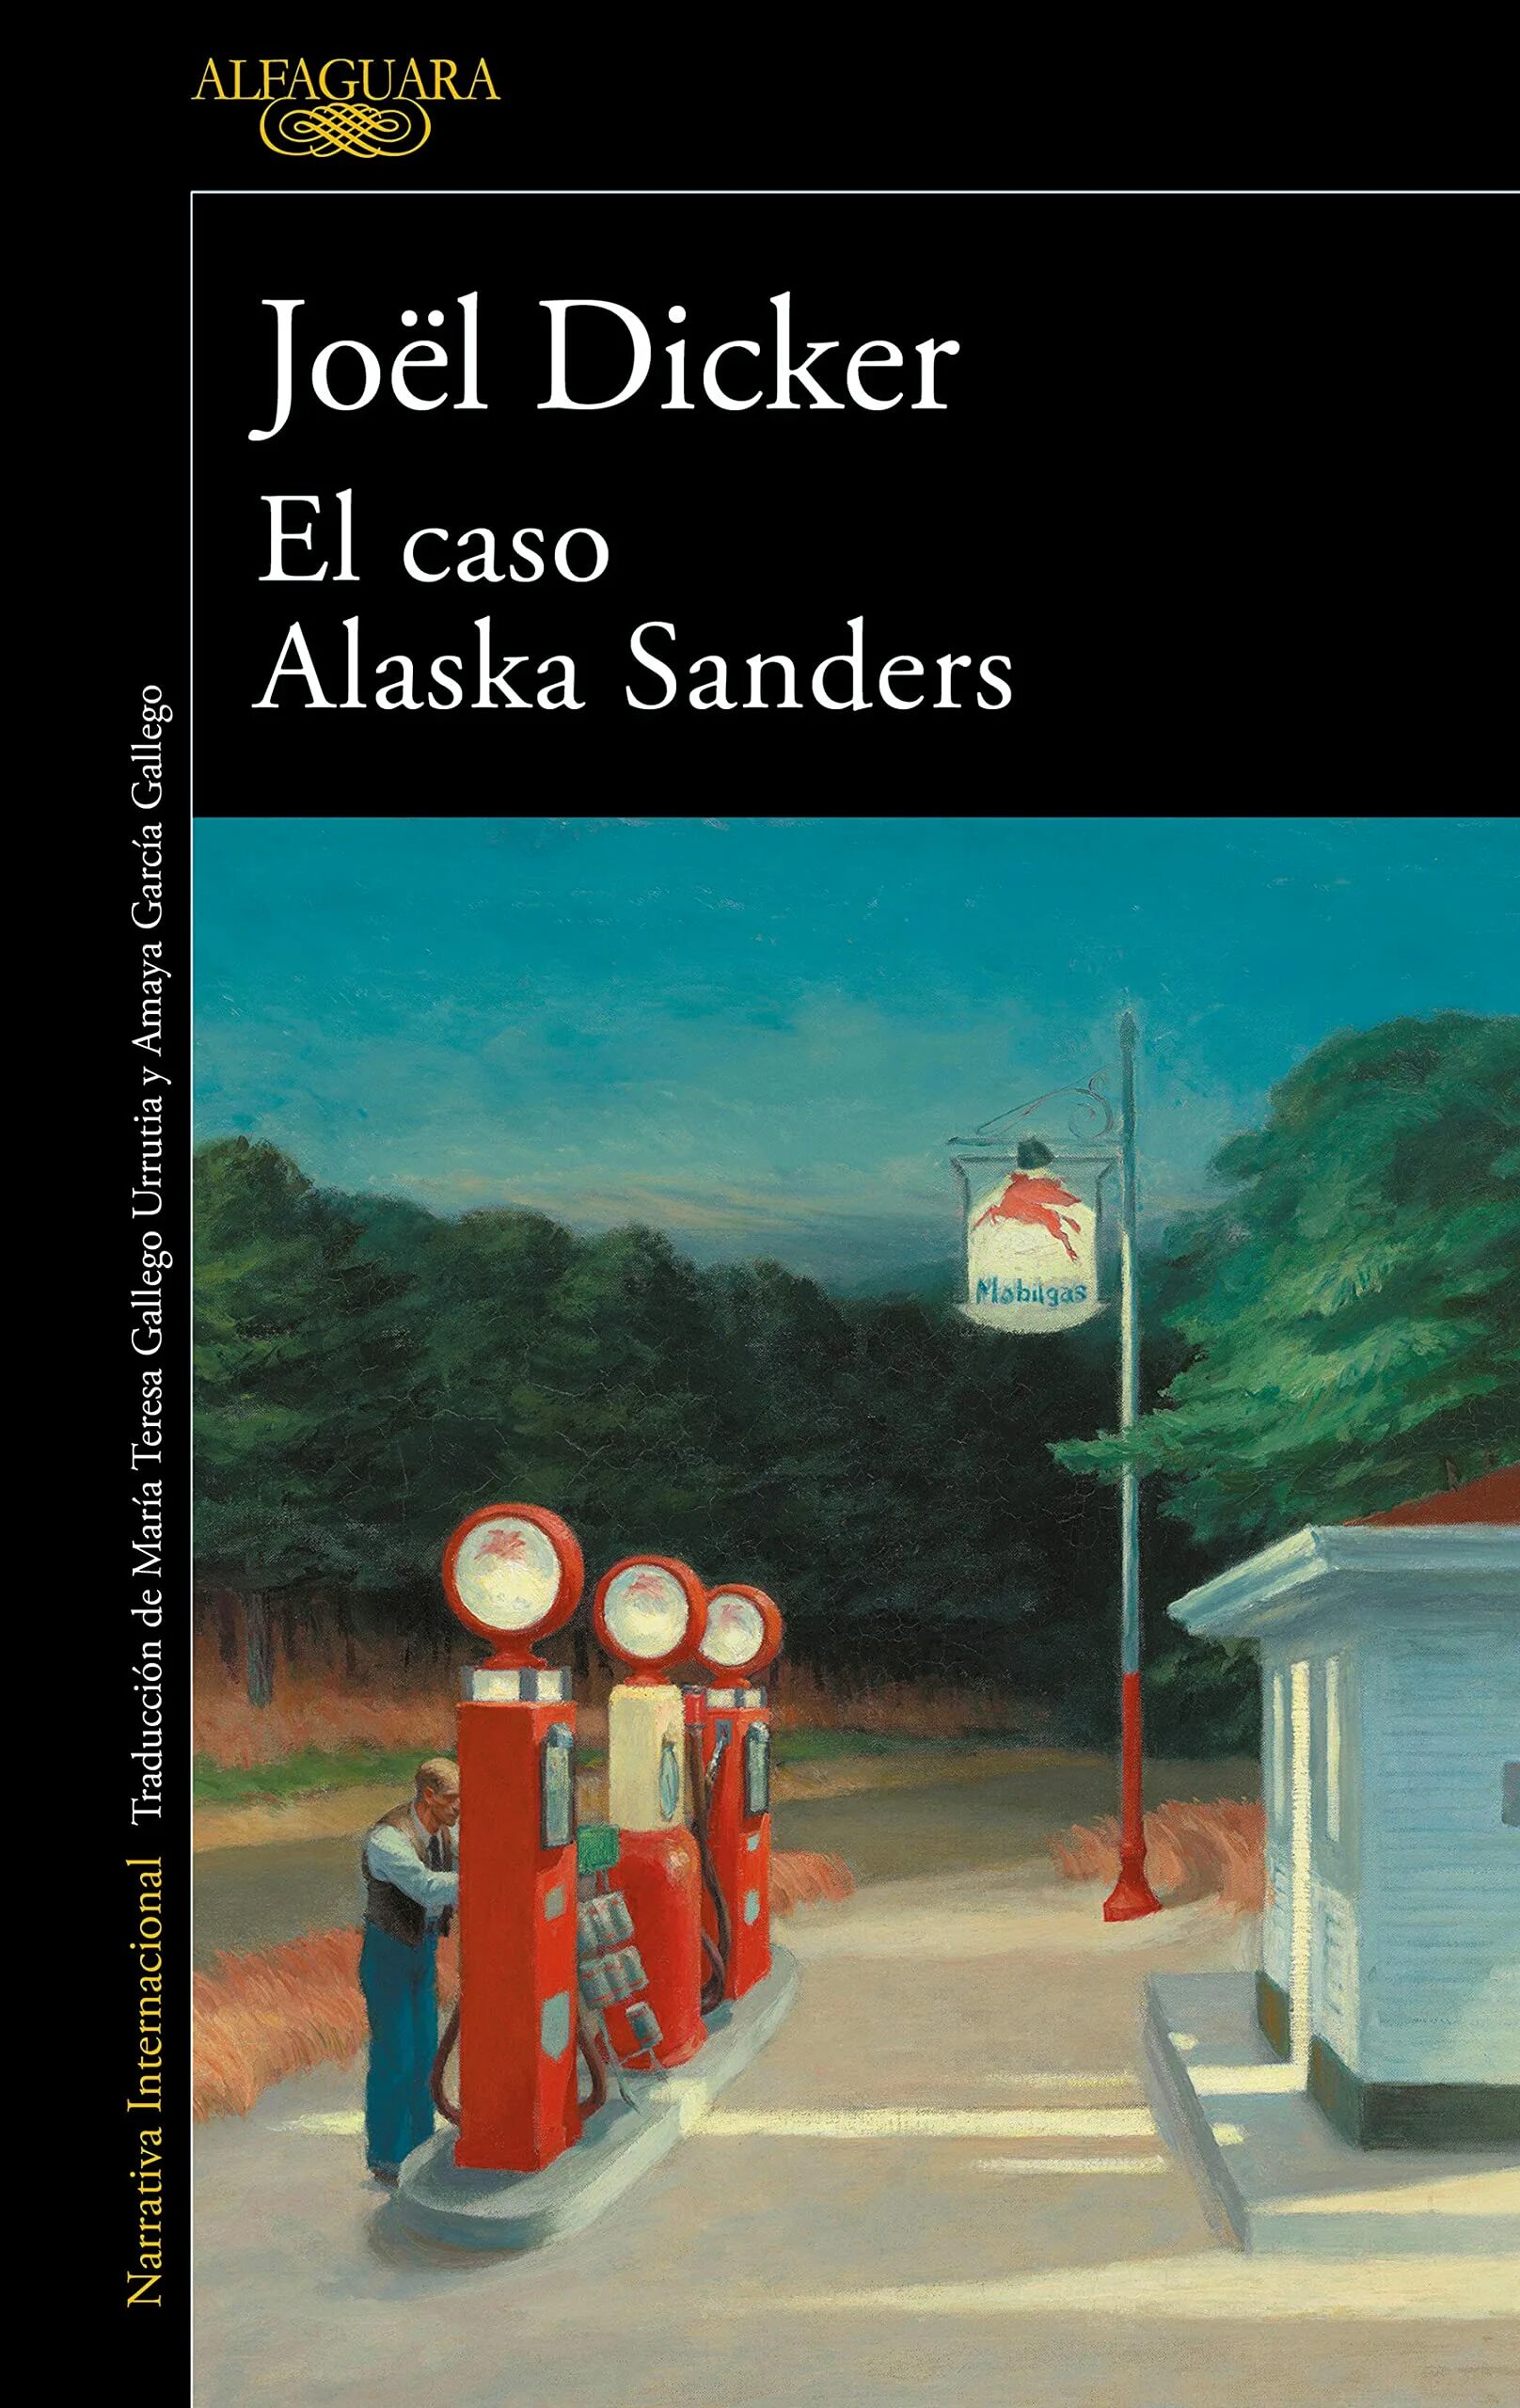 Дело аляски сандерс жоэль. Жоэль Диккер Аляска Сандерс. Дело Аляски Сандерс. “The Case of Alaska Sanders” by Joël dicker Cover. “The Case of Alaska Sanders” by Joël dicker.